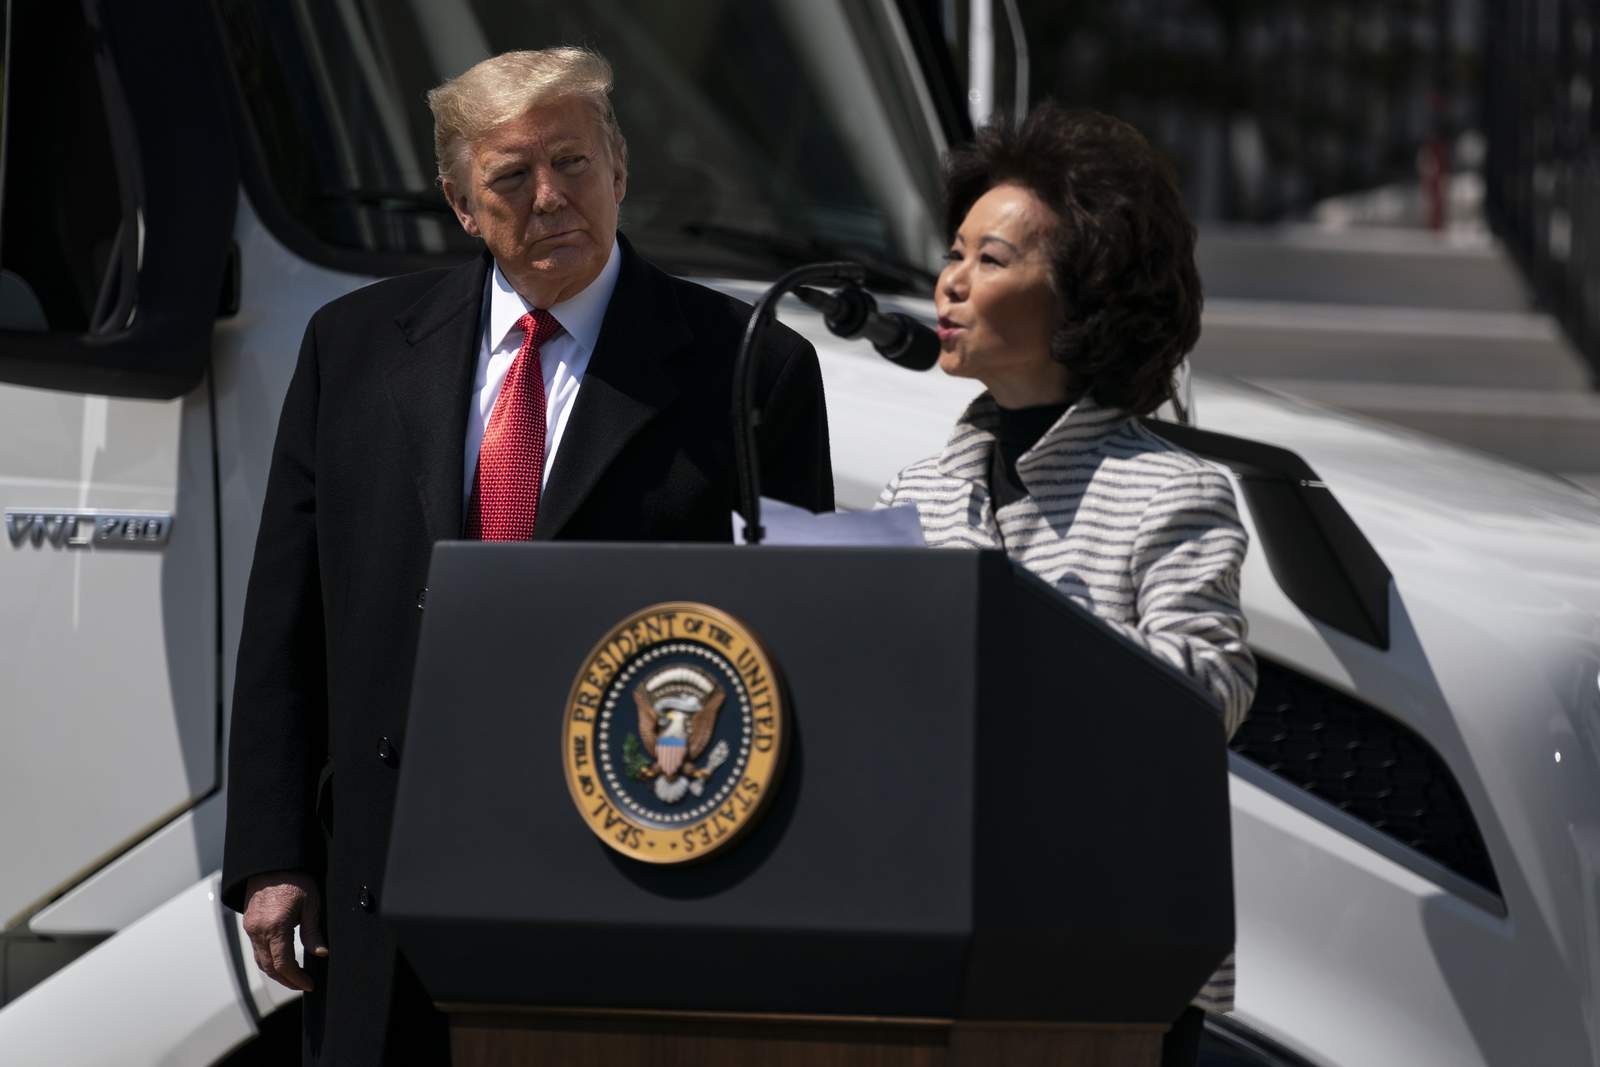 Trump’s Transportation Secretary Elaine Chao resigns after Capitol riot